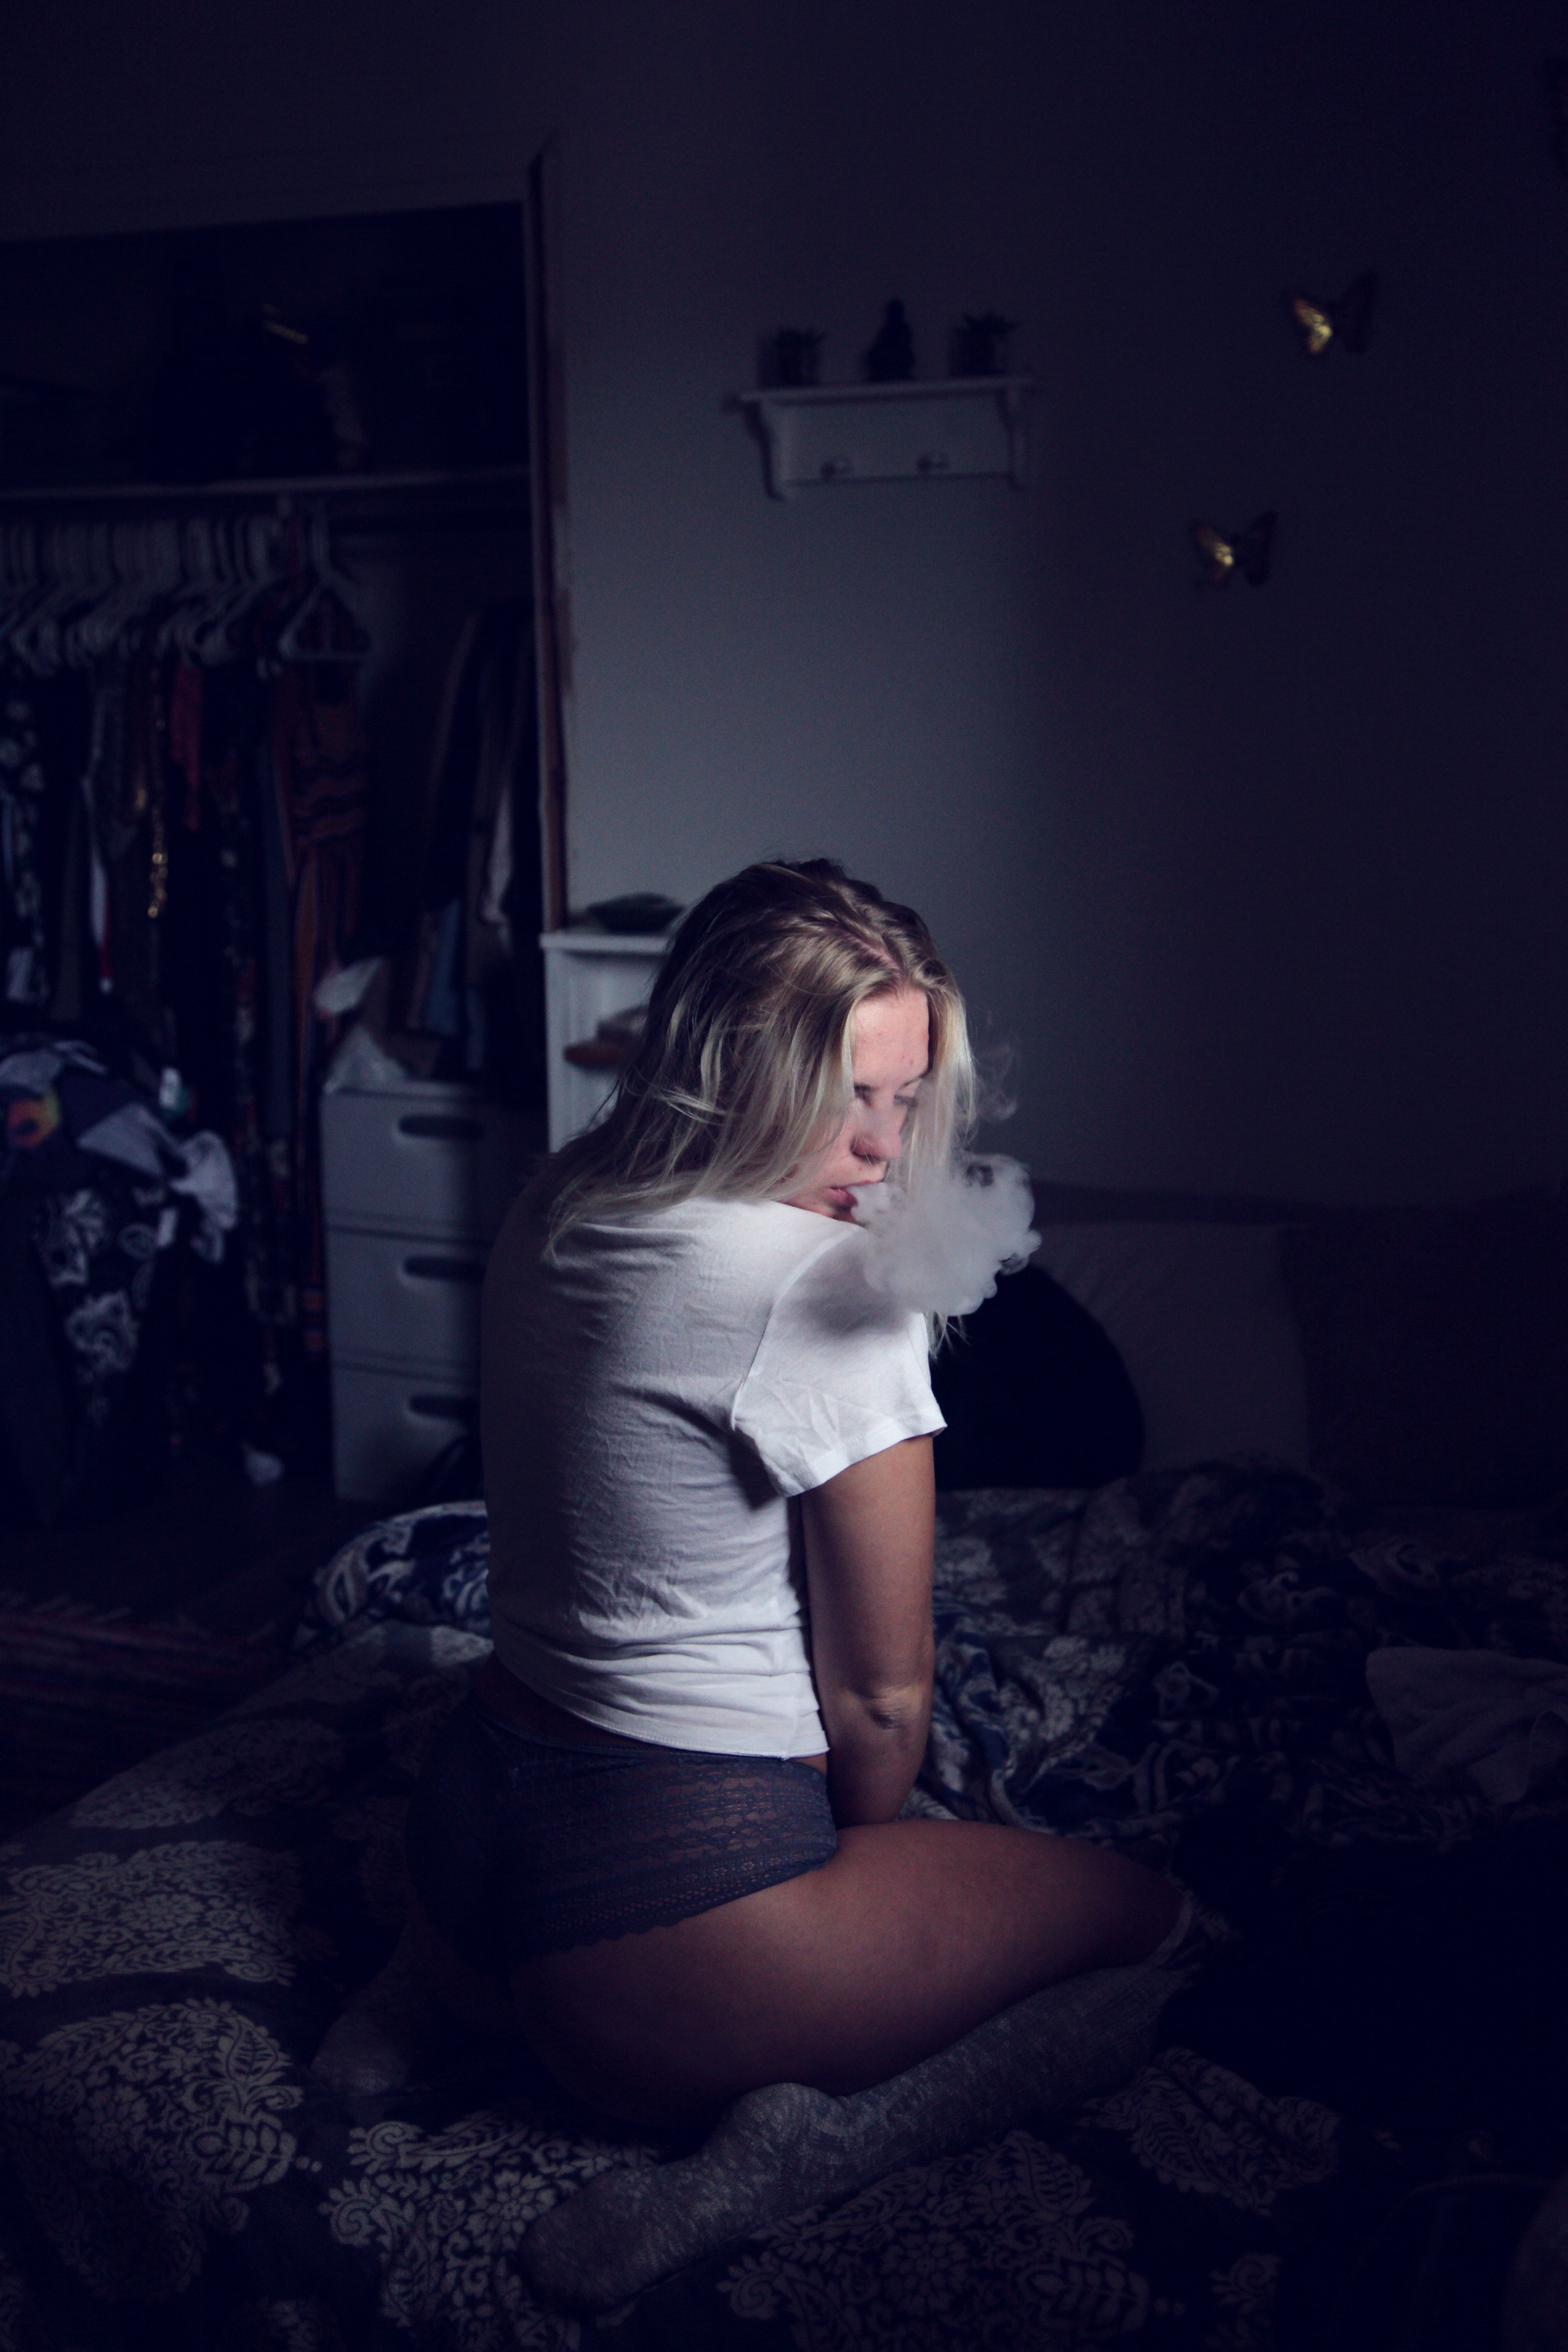 Woman Wearing White Shirt Sitting on Sofa and Smoking · Free Stock